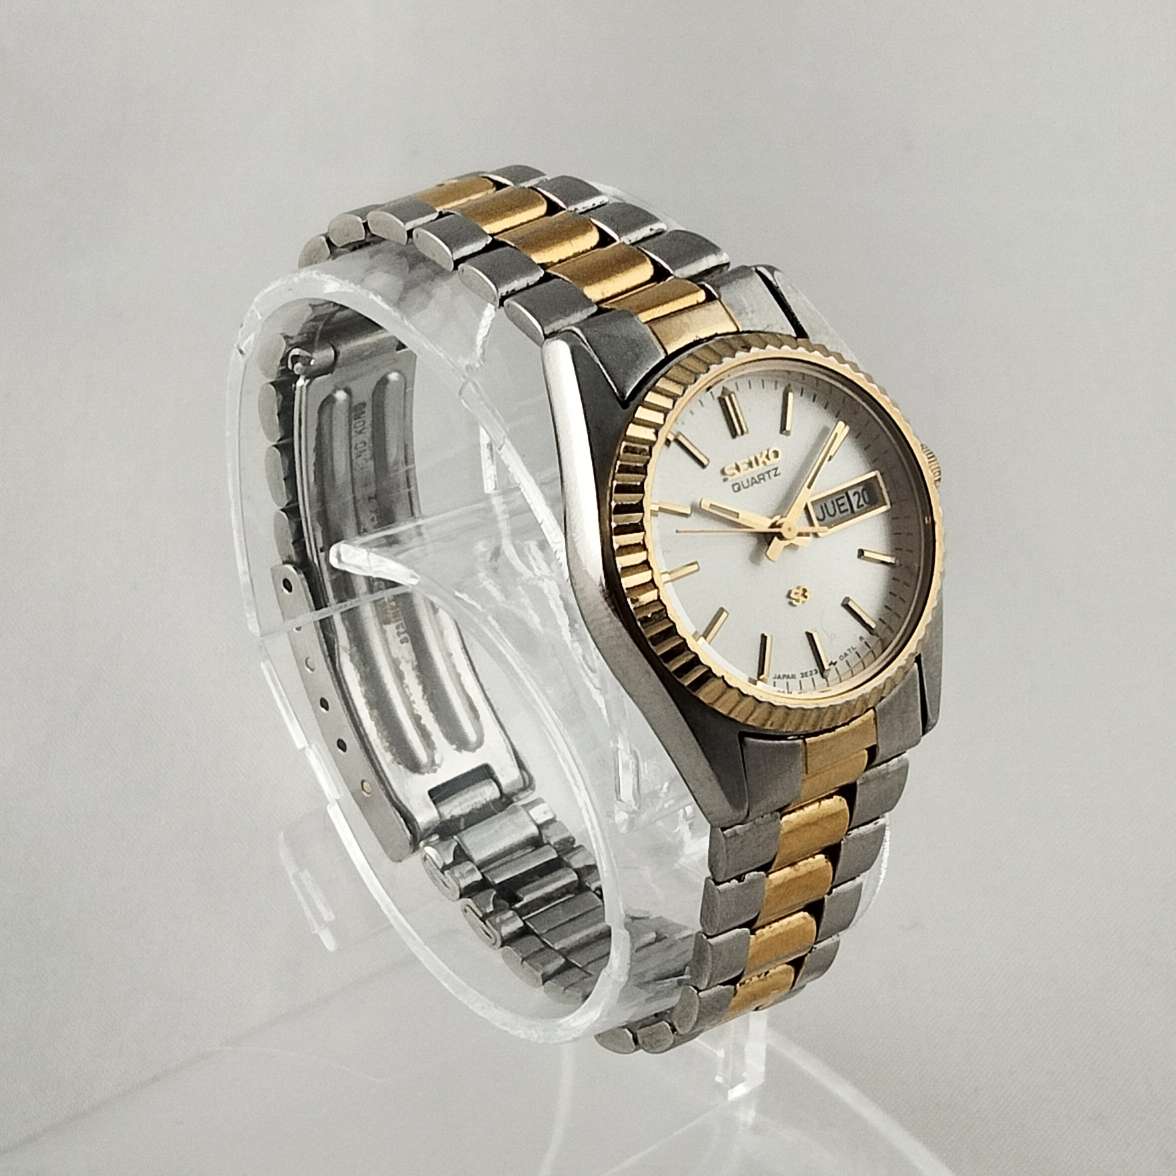 Seiko Unisex Watch, Silver and Gold Tone, Bracelet Strap